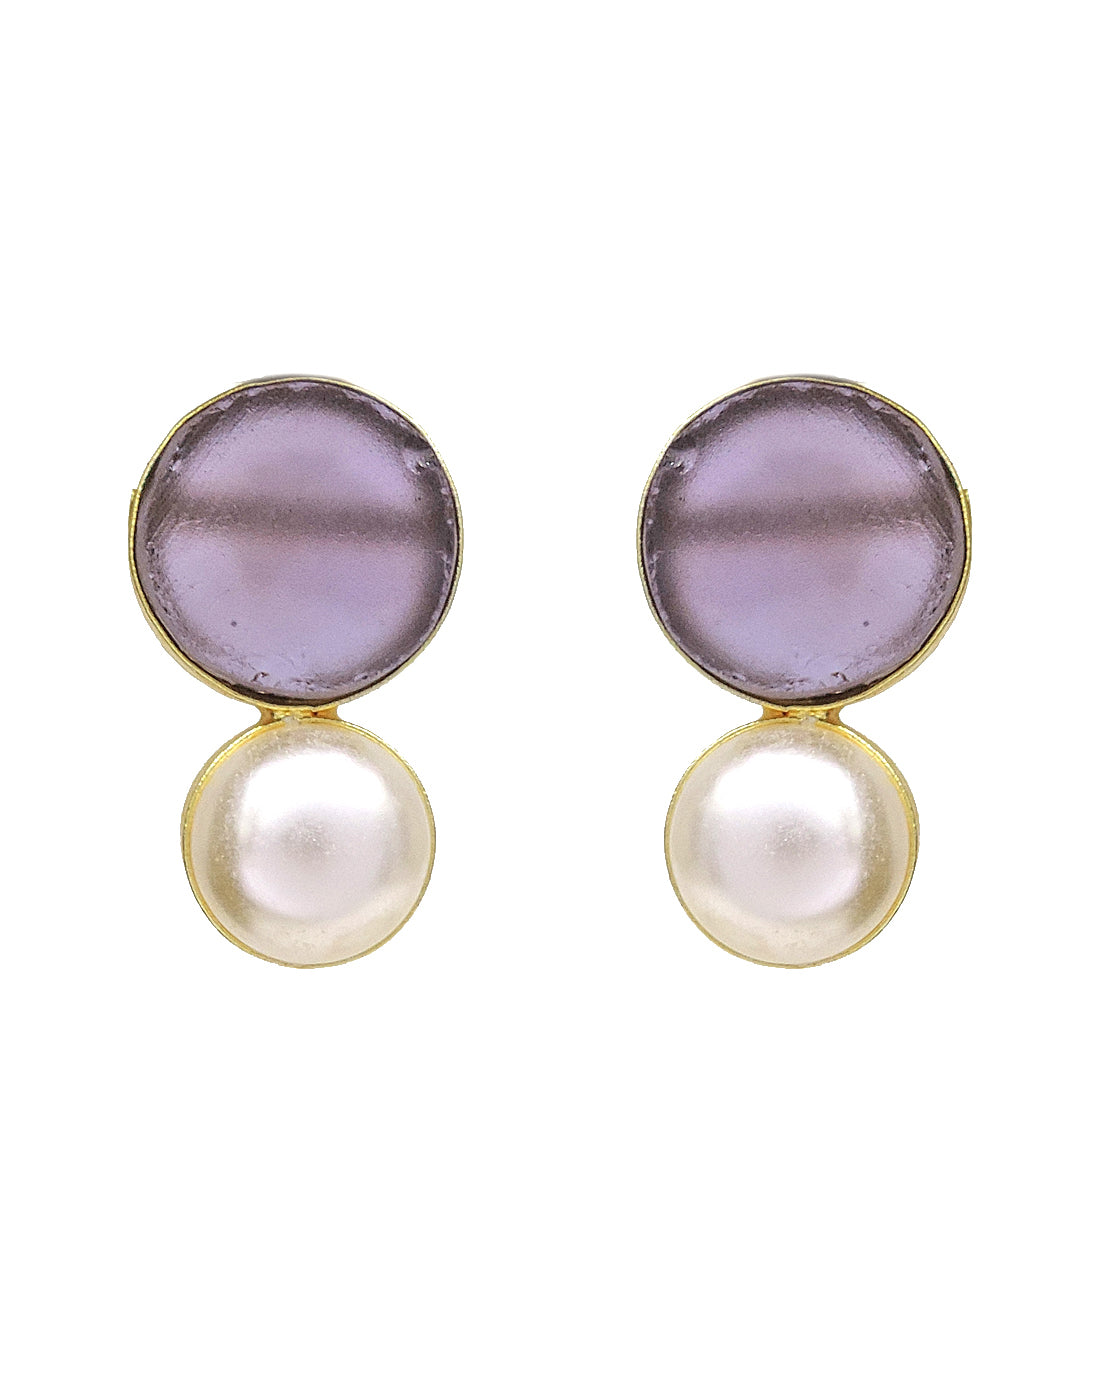 Pearl & Stone Earrings (Amethyst) - Statement Earrings - Gold-Plated & Hypoallergenic Jewellery - Made in India - Dubai Jewellery - Dori